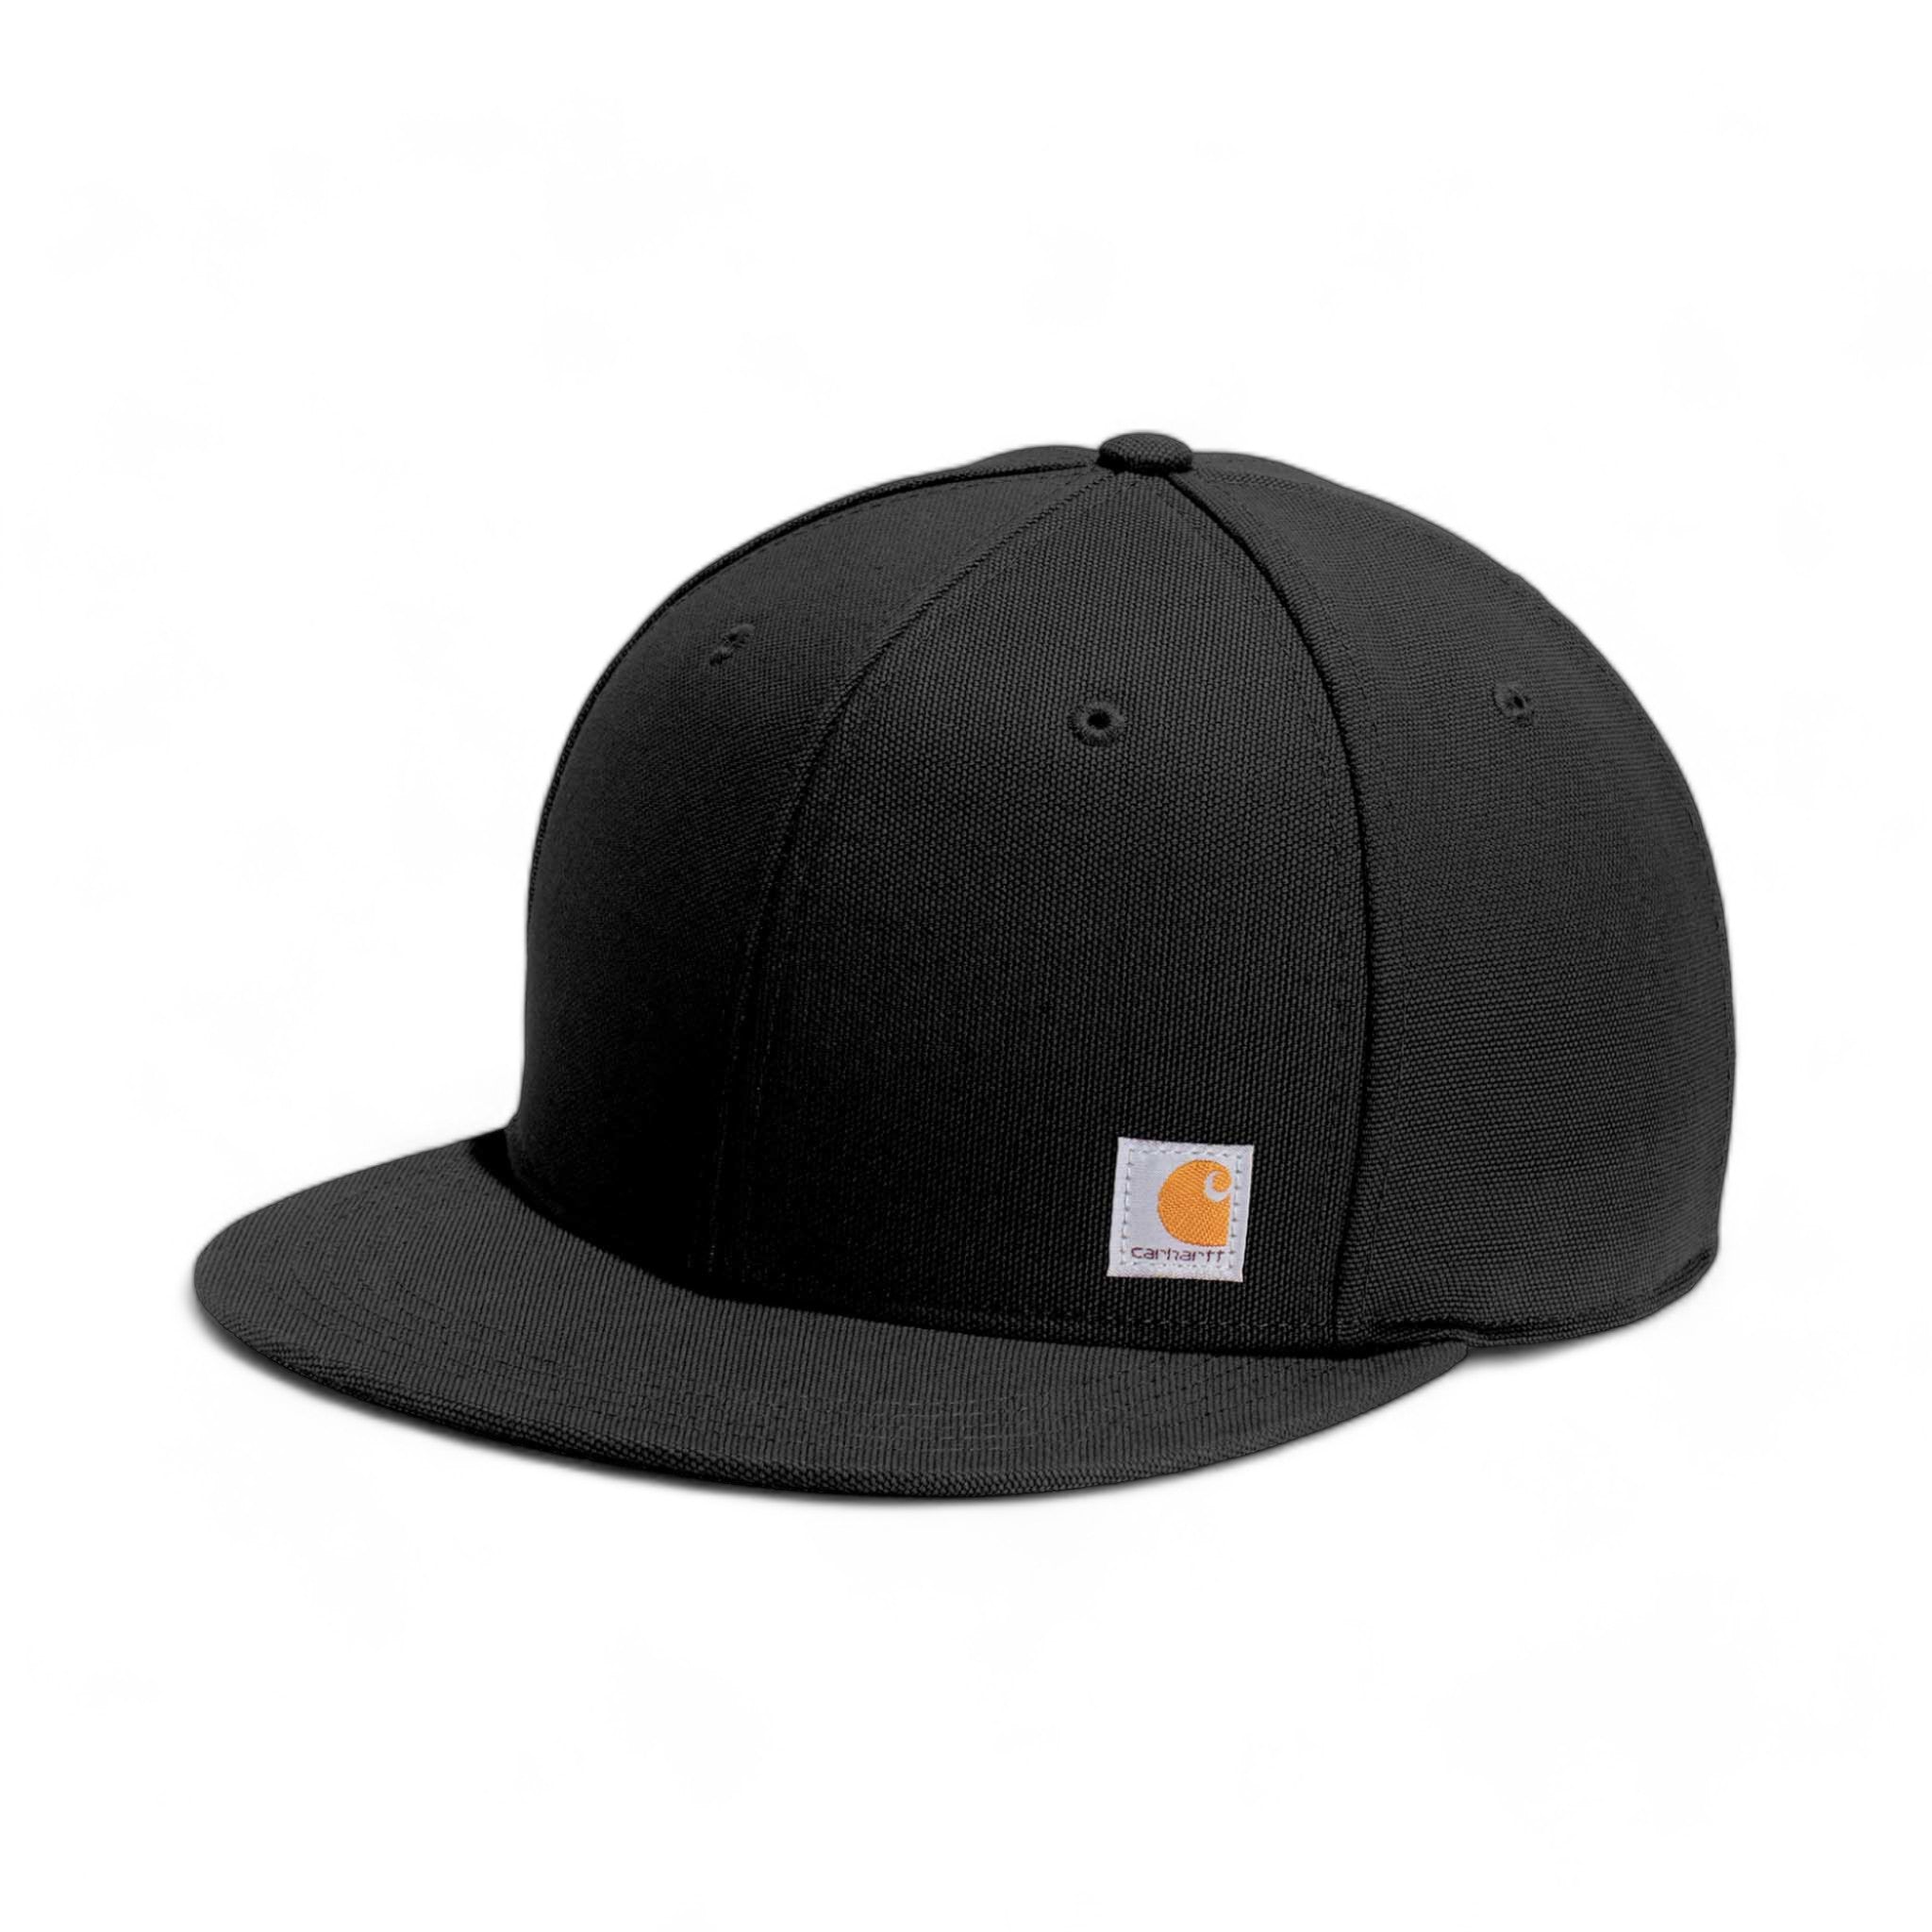 Side view of Carthartt CT101604 custom hat in black